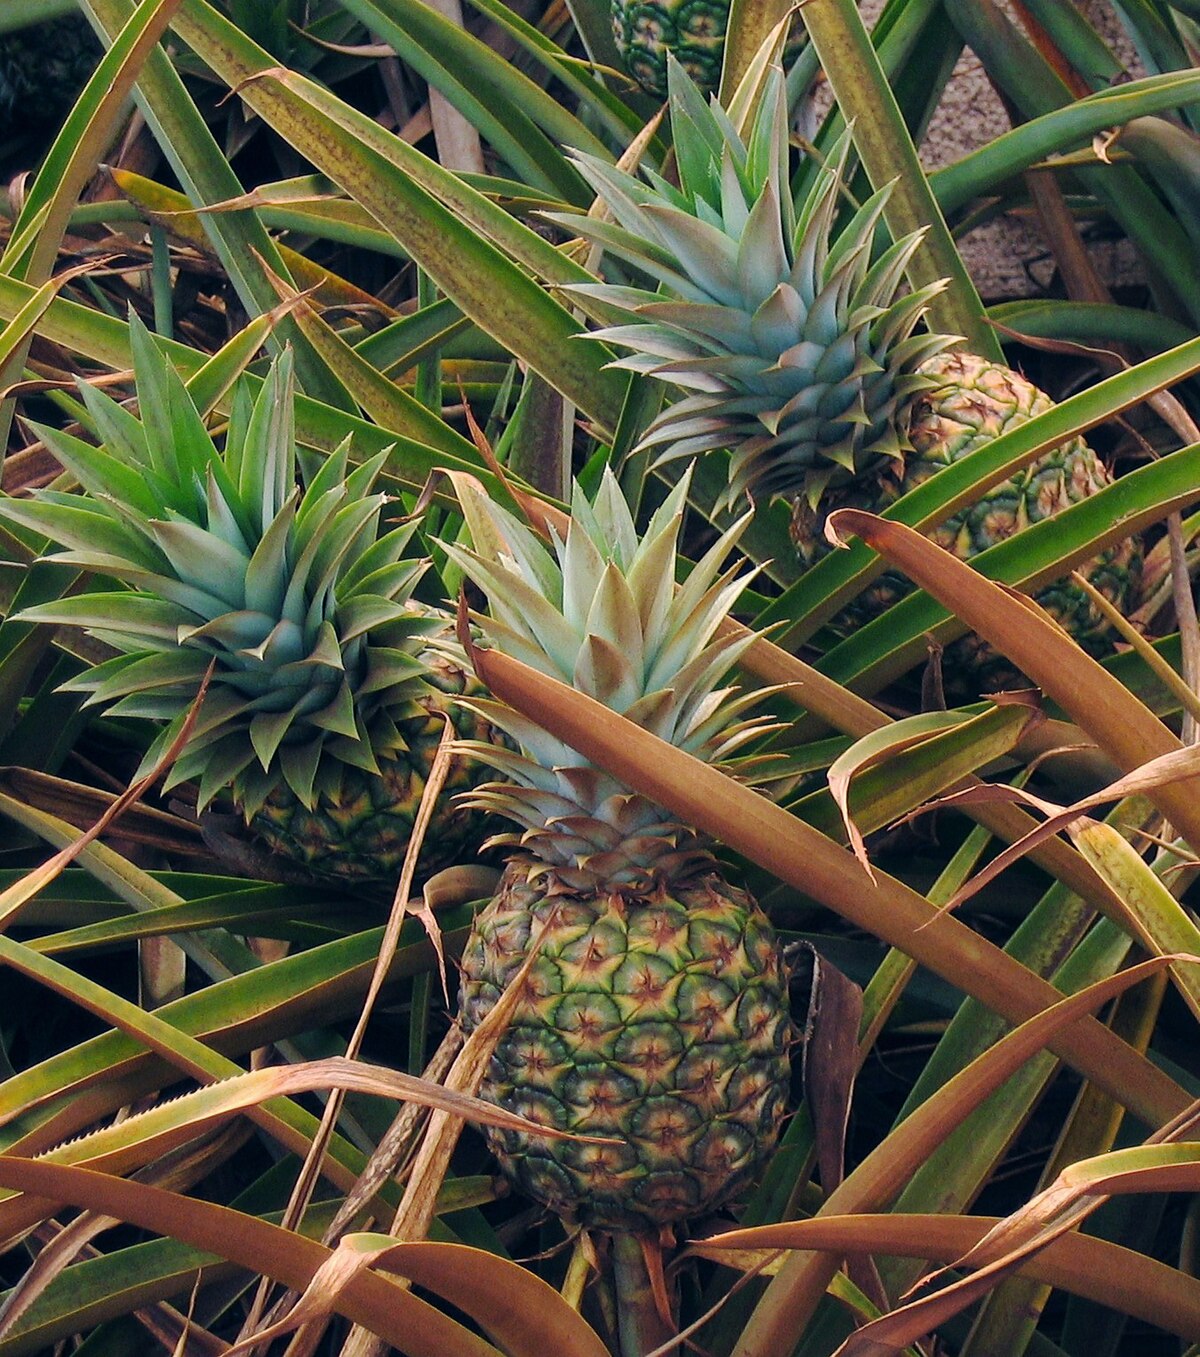 Ananas (Ananas comosus), Ananaspflanze mit reifer Frucht